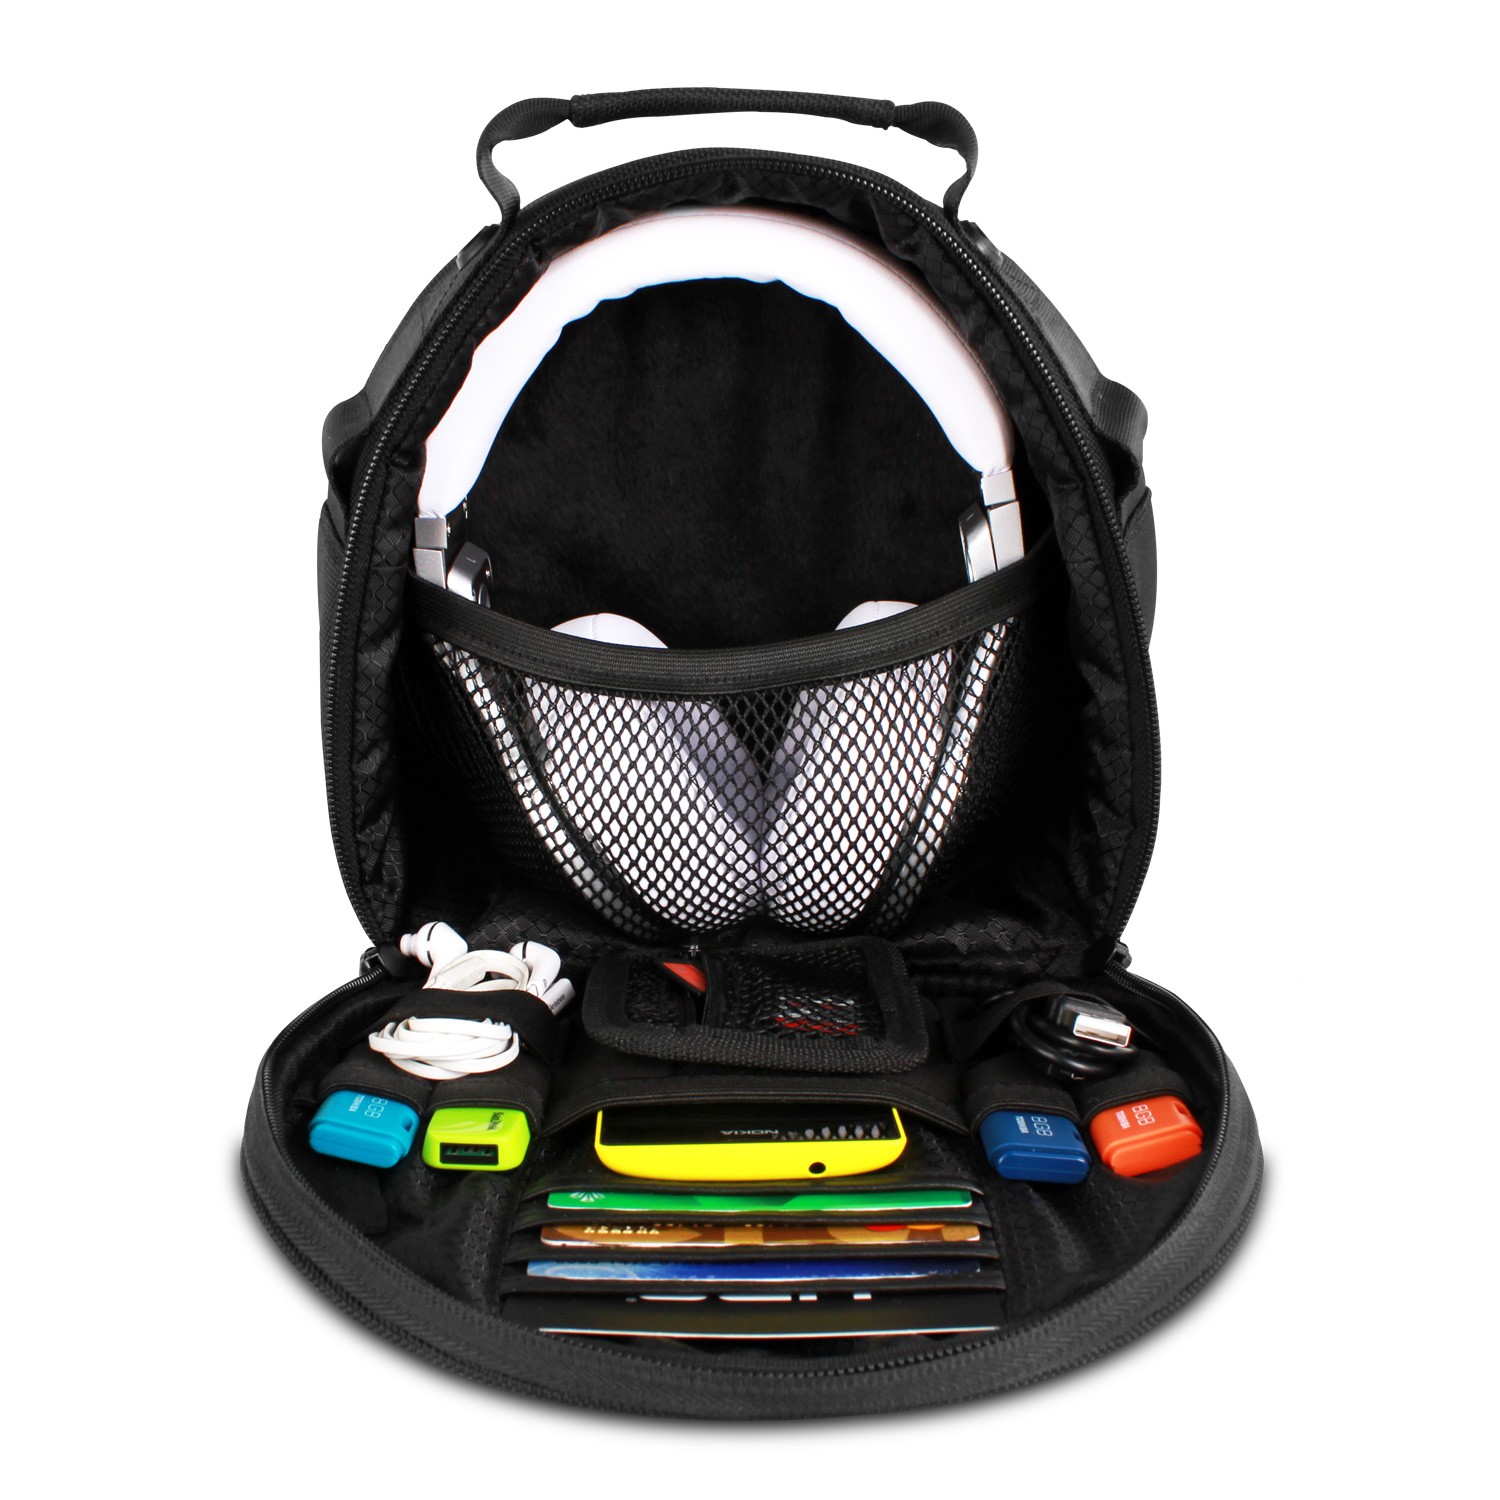 UDG Ultimate DIGI Headphone Bag Black по цене 4 510 ₽